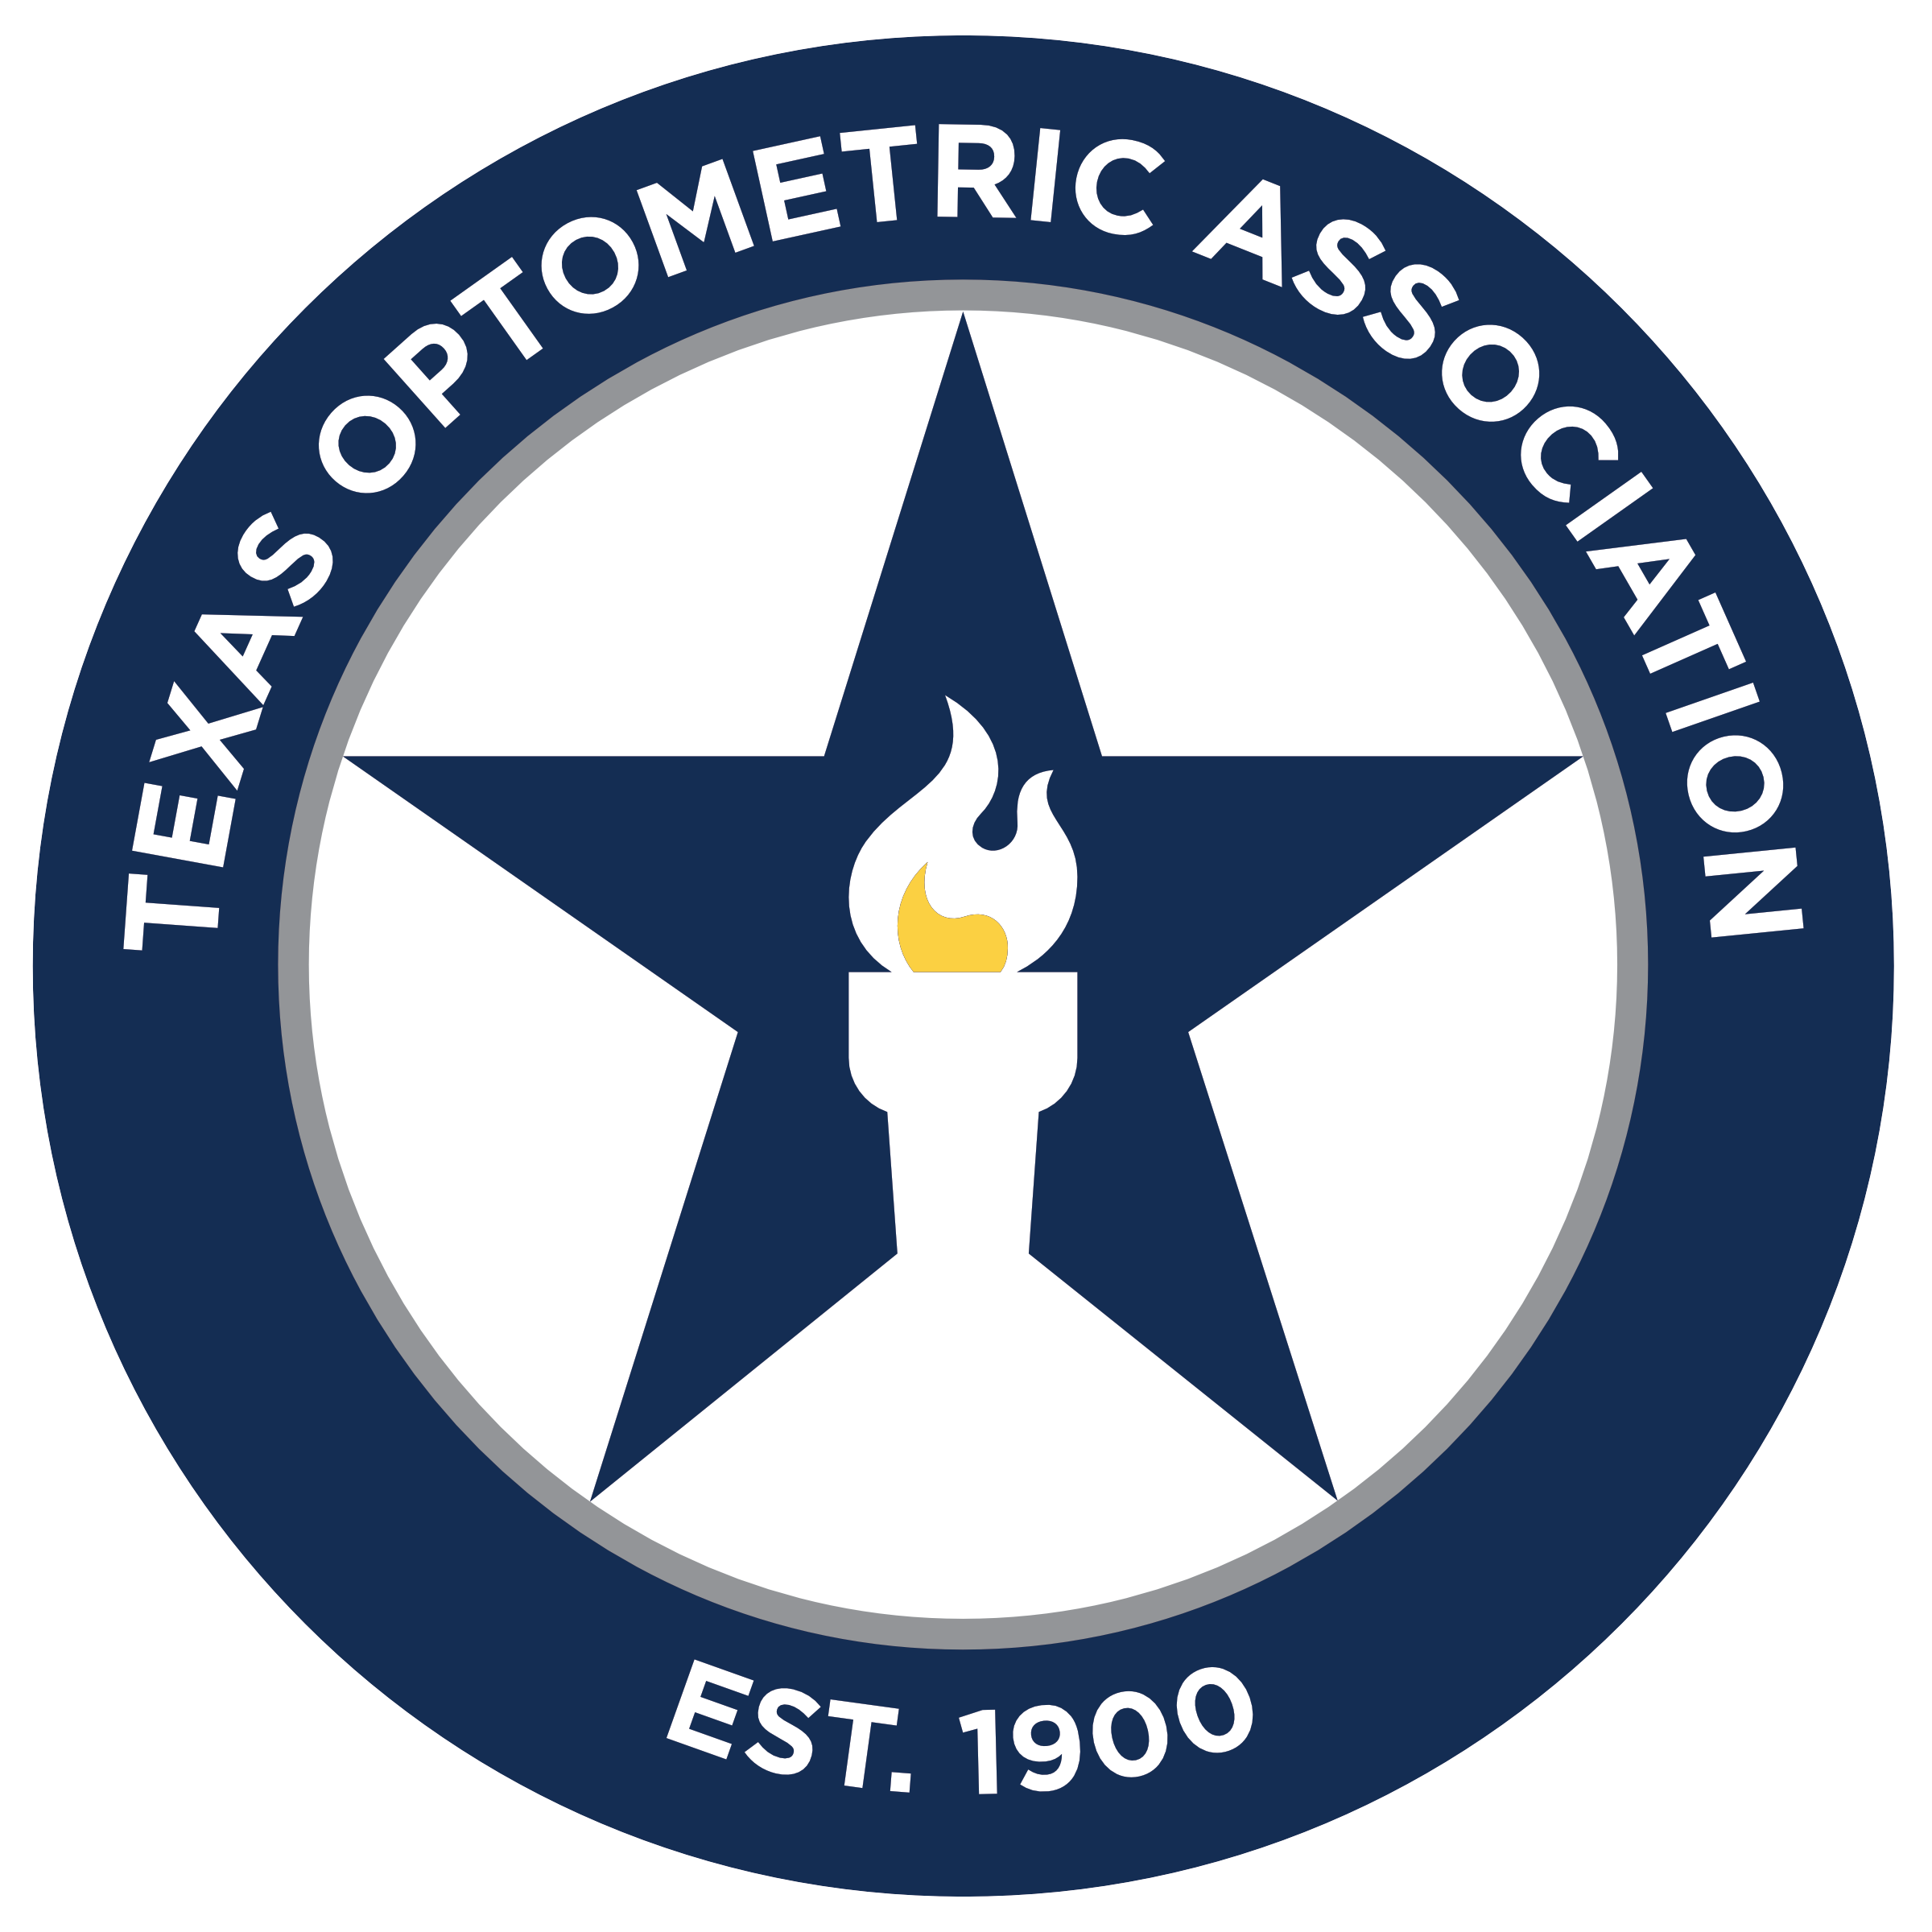 Texas Charter Schools Association